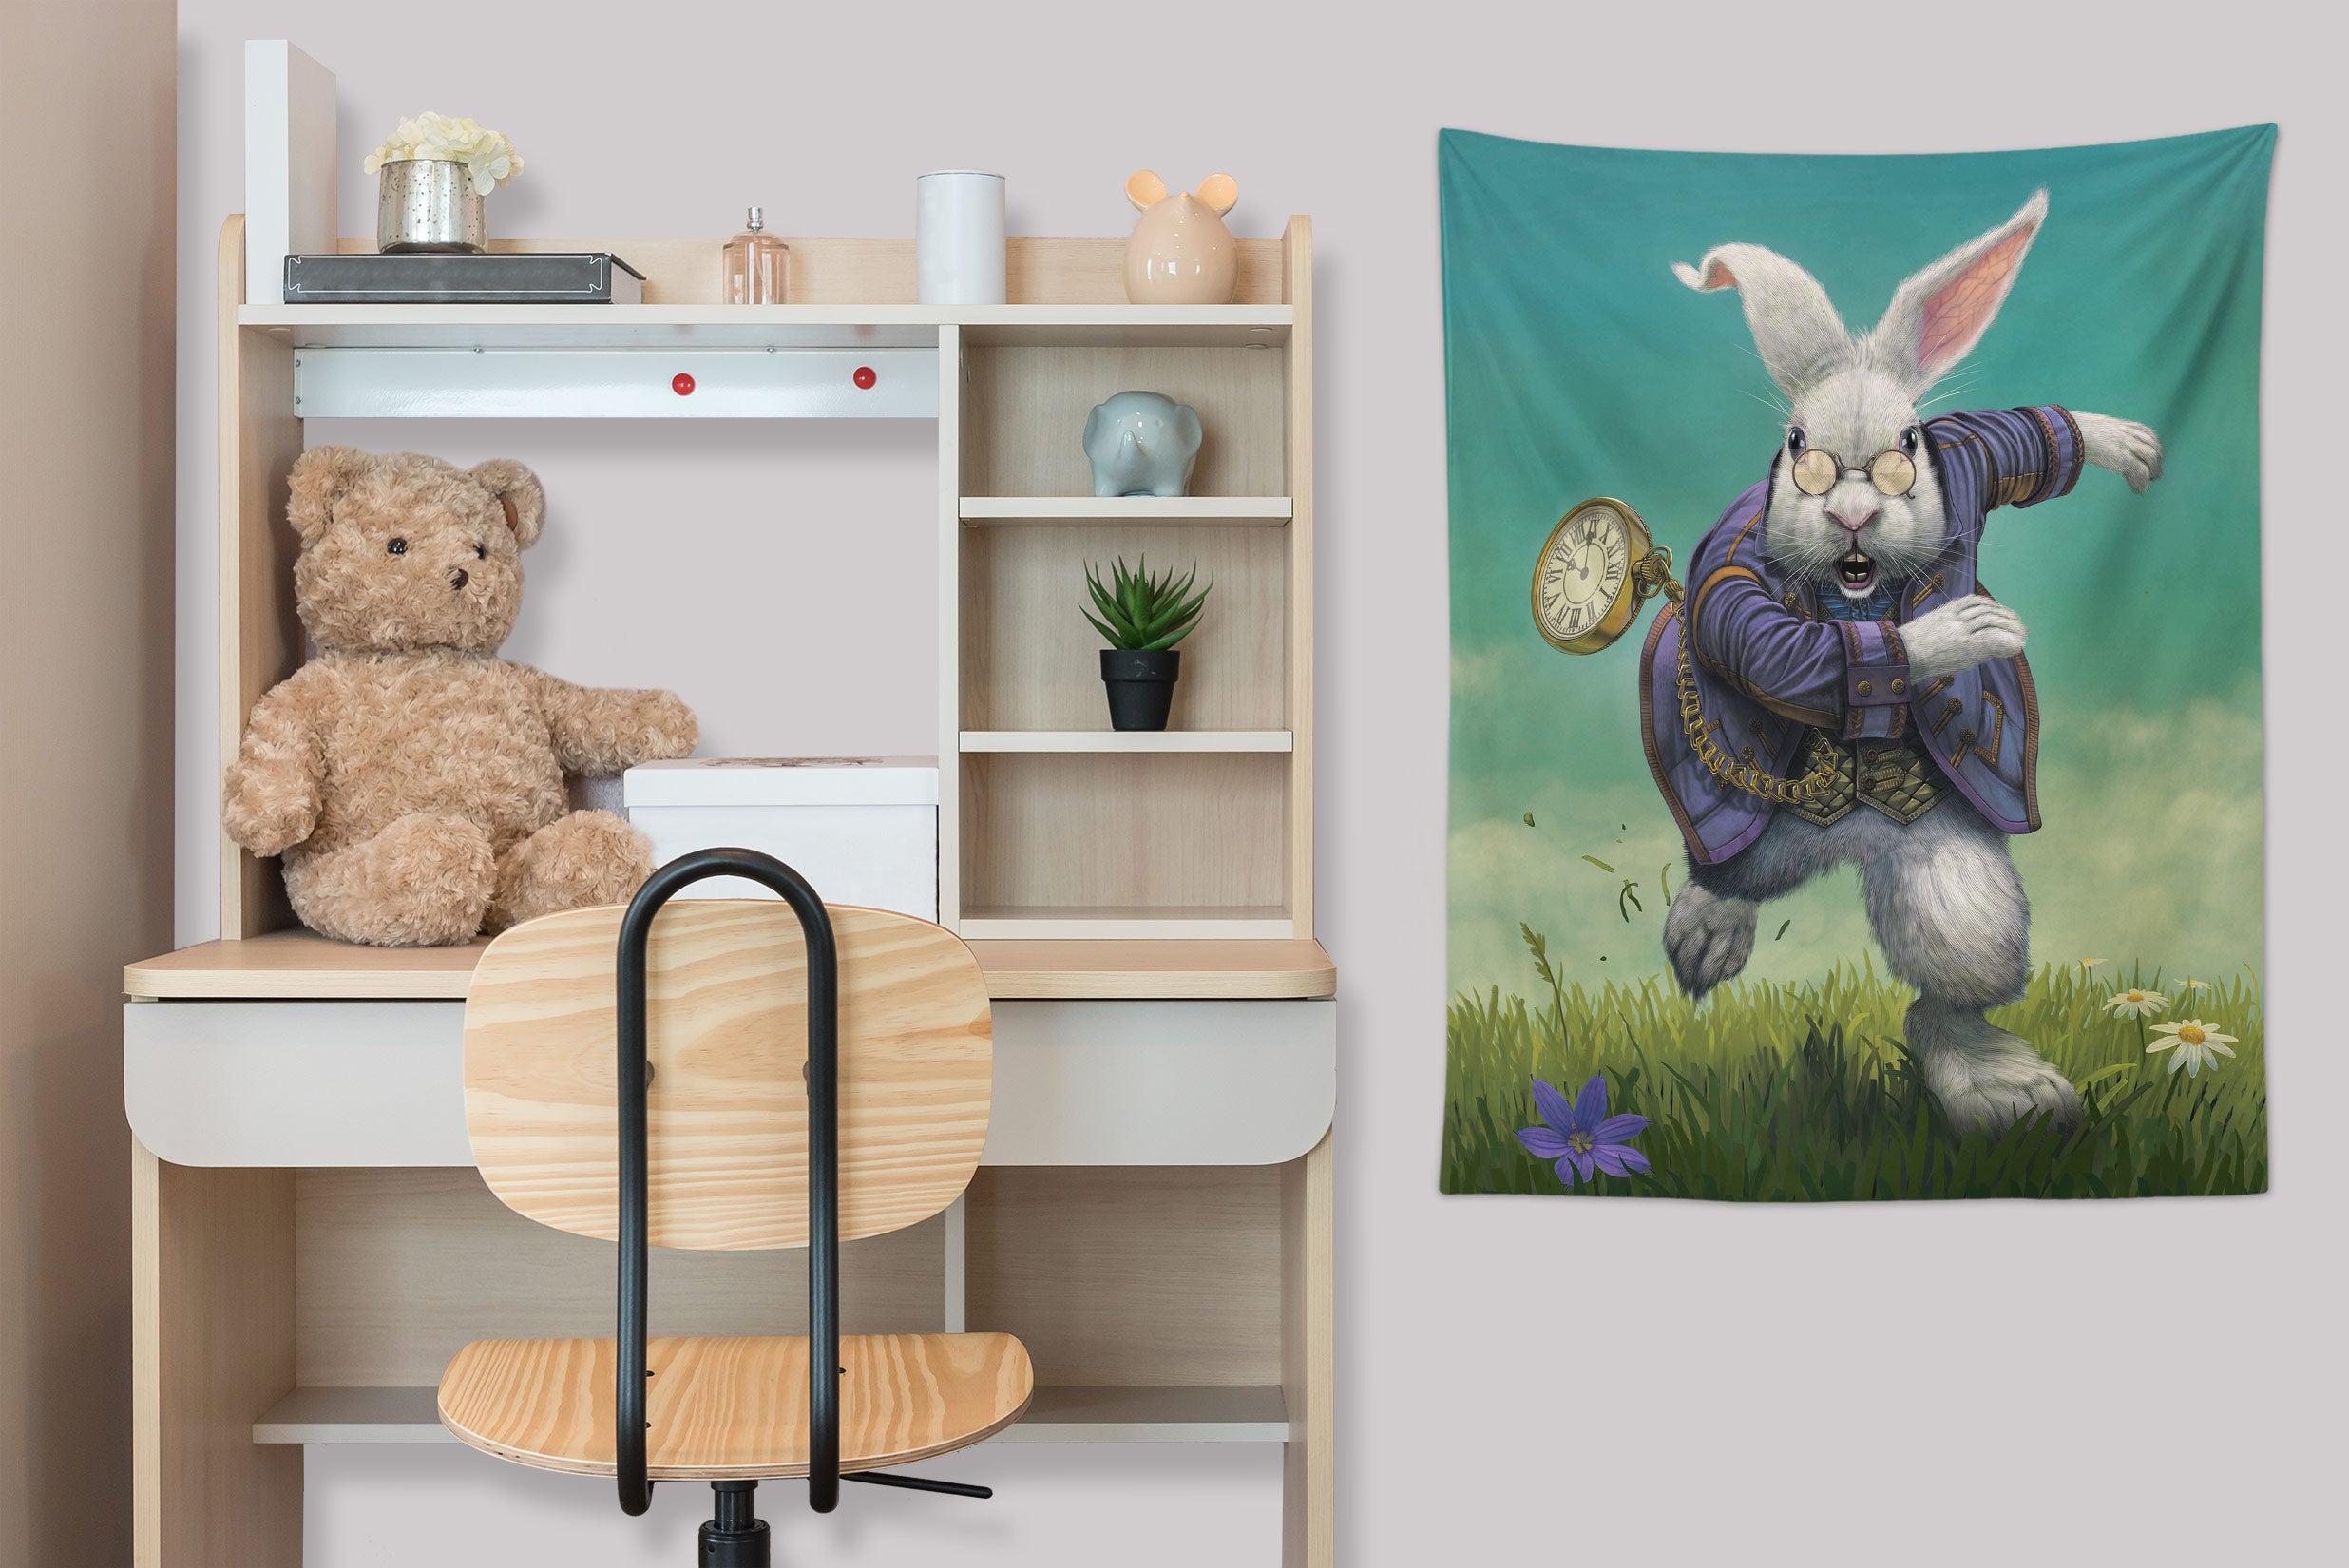 3D Pocket Watch Rabbit 11752 Vincent Tapestry Hanging Cloth Hang